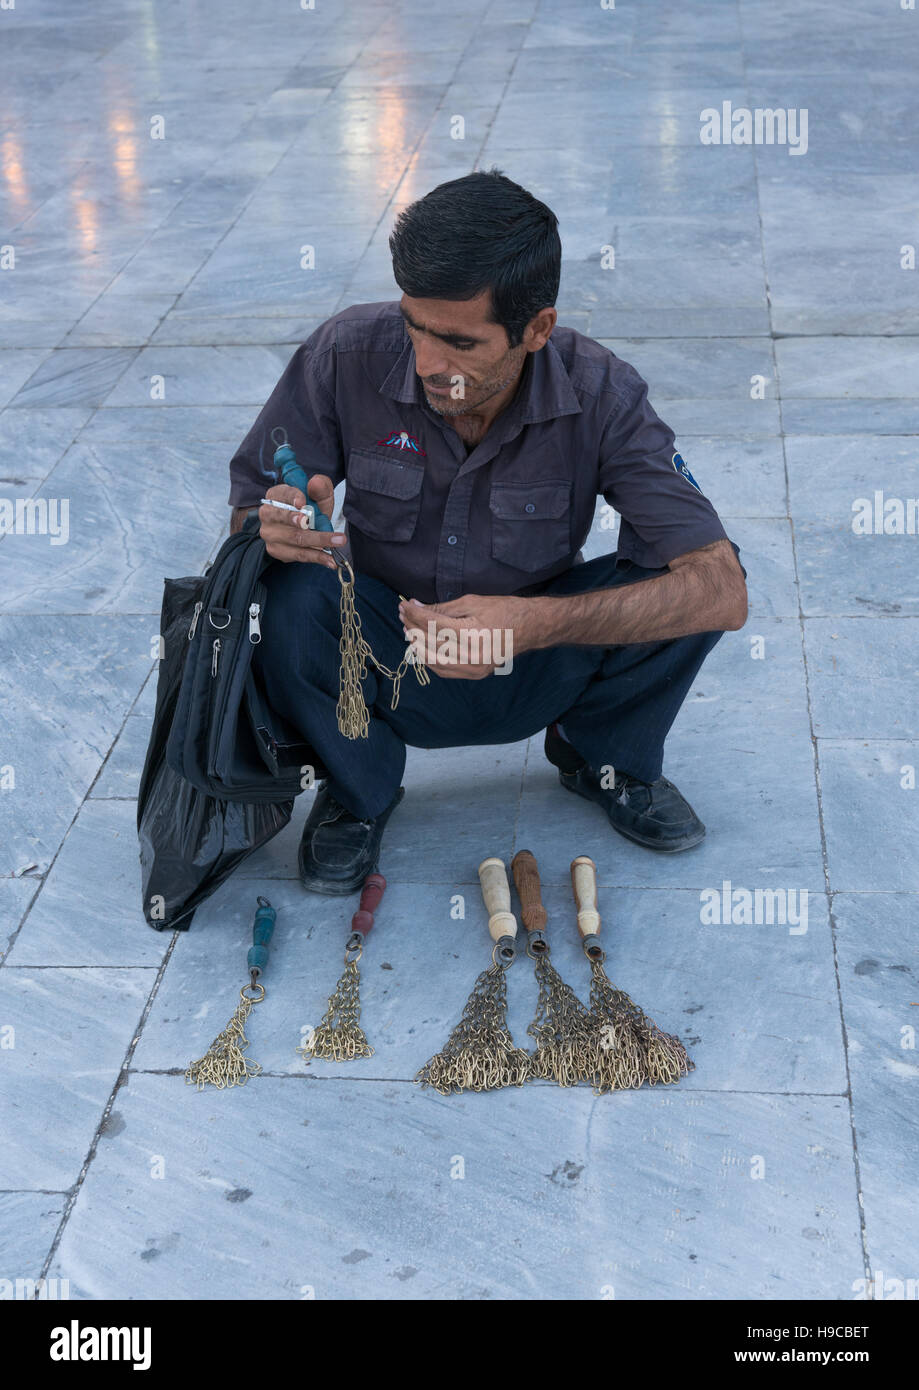 Man selling iron chains for children in fatima al-masumeh shrine during muharram, Central county, Qom, Iran Stock Photo